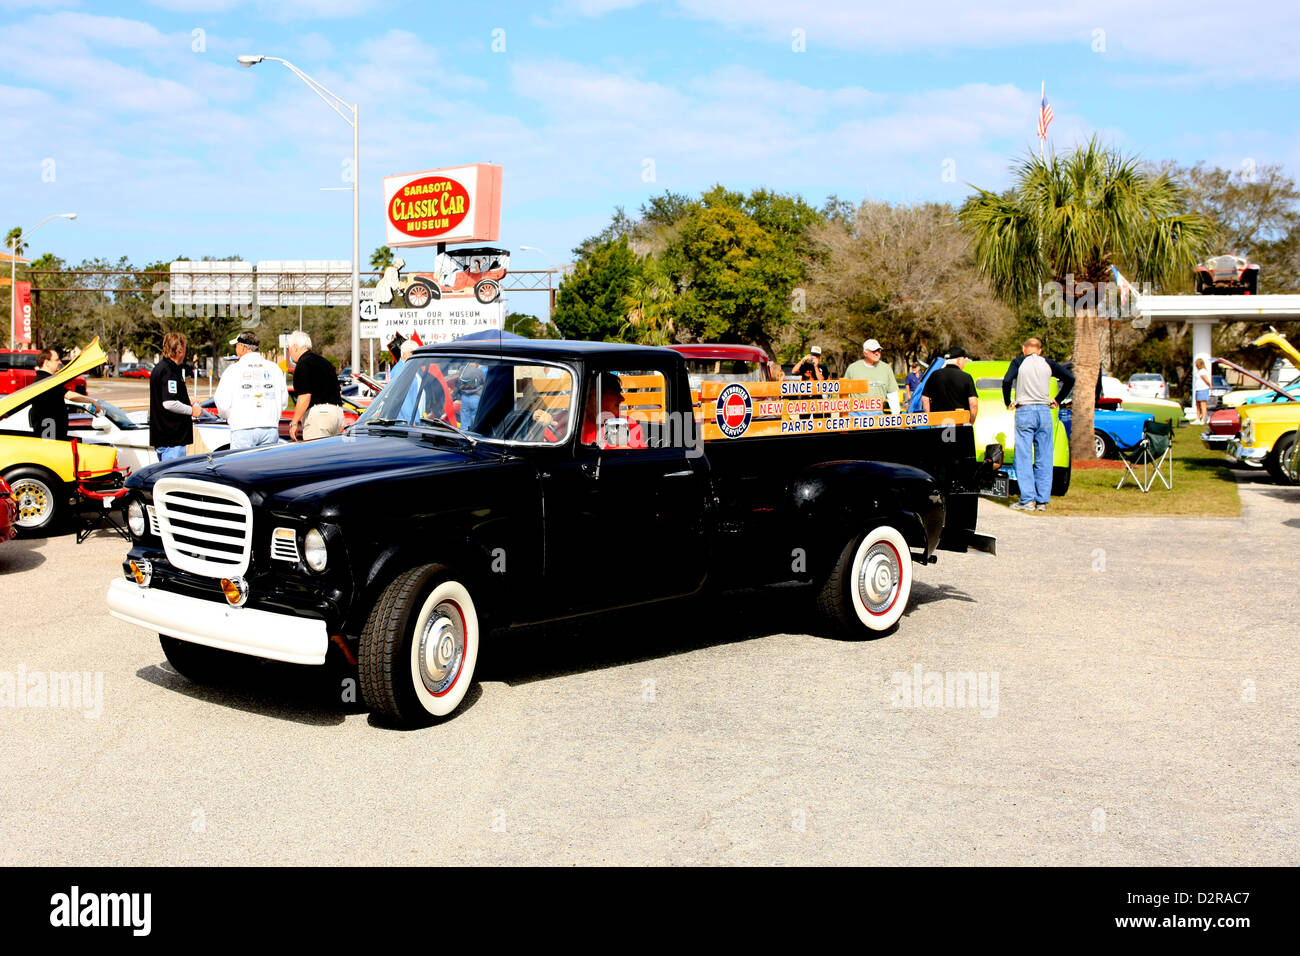 Sarasota Classic Car Pride & Joy Car Show Stock Photo Alamy